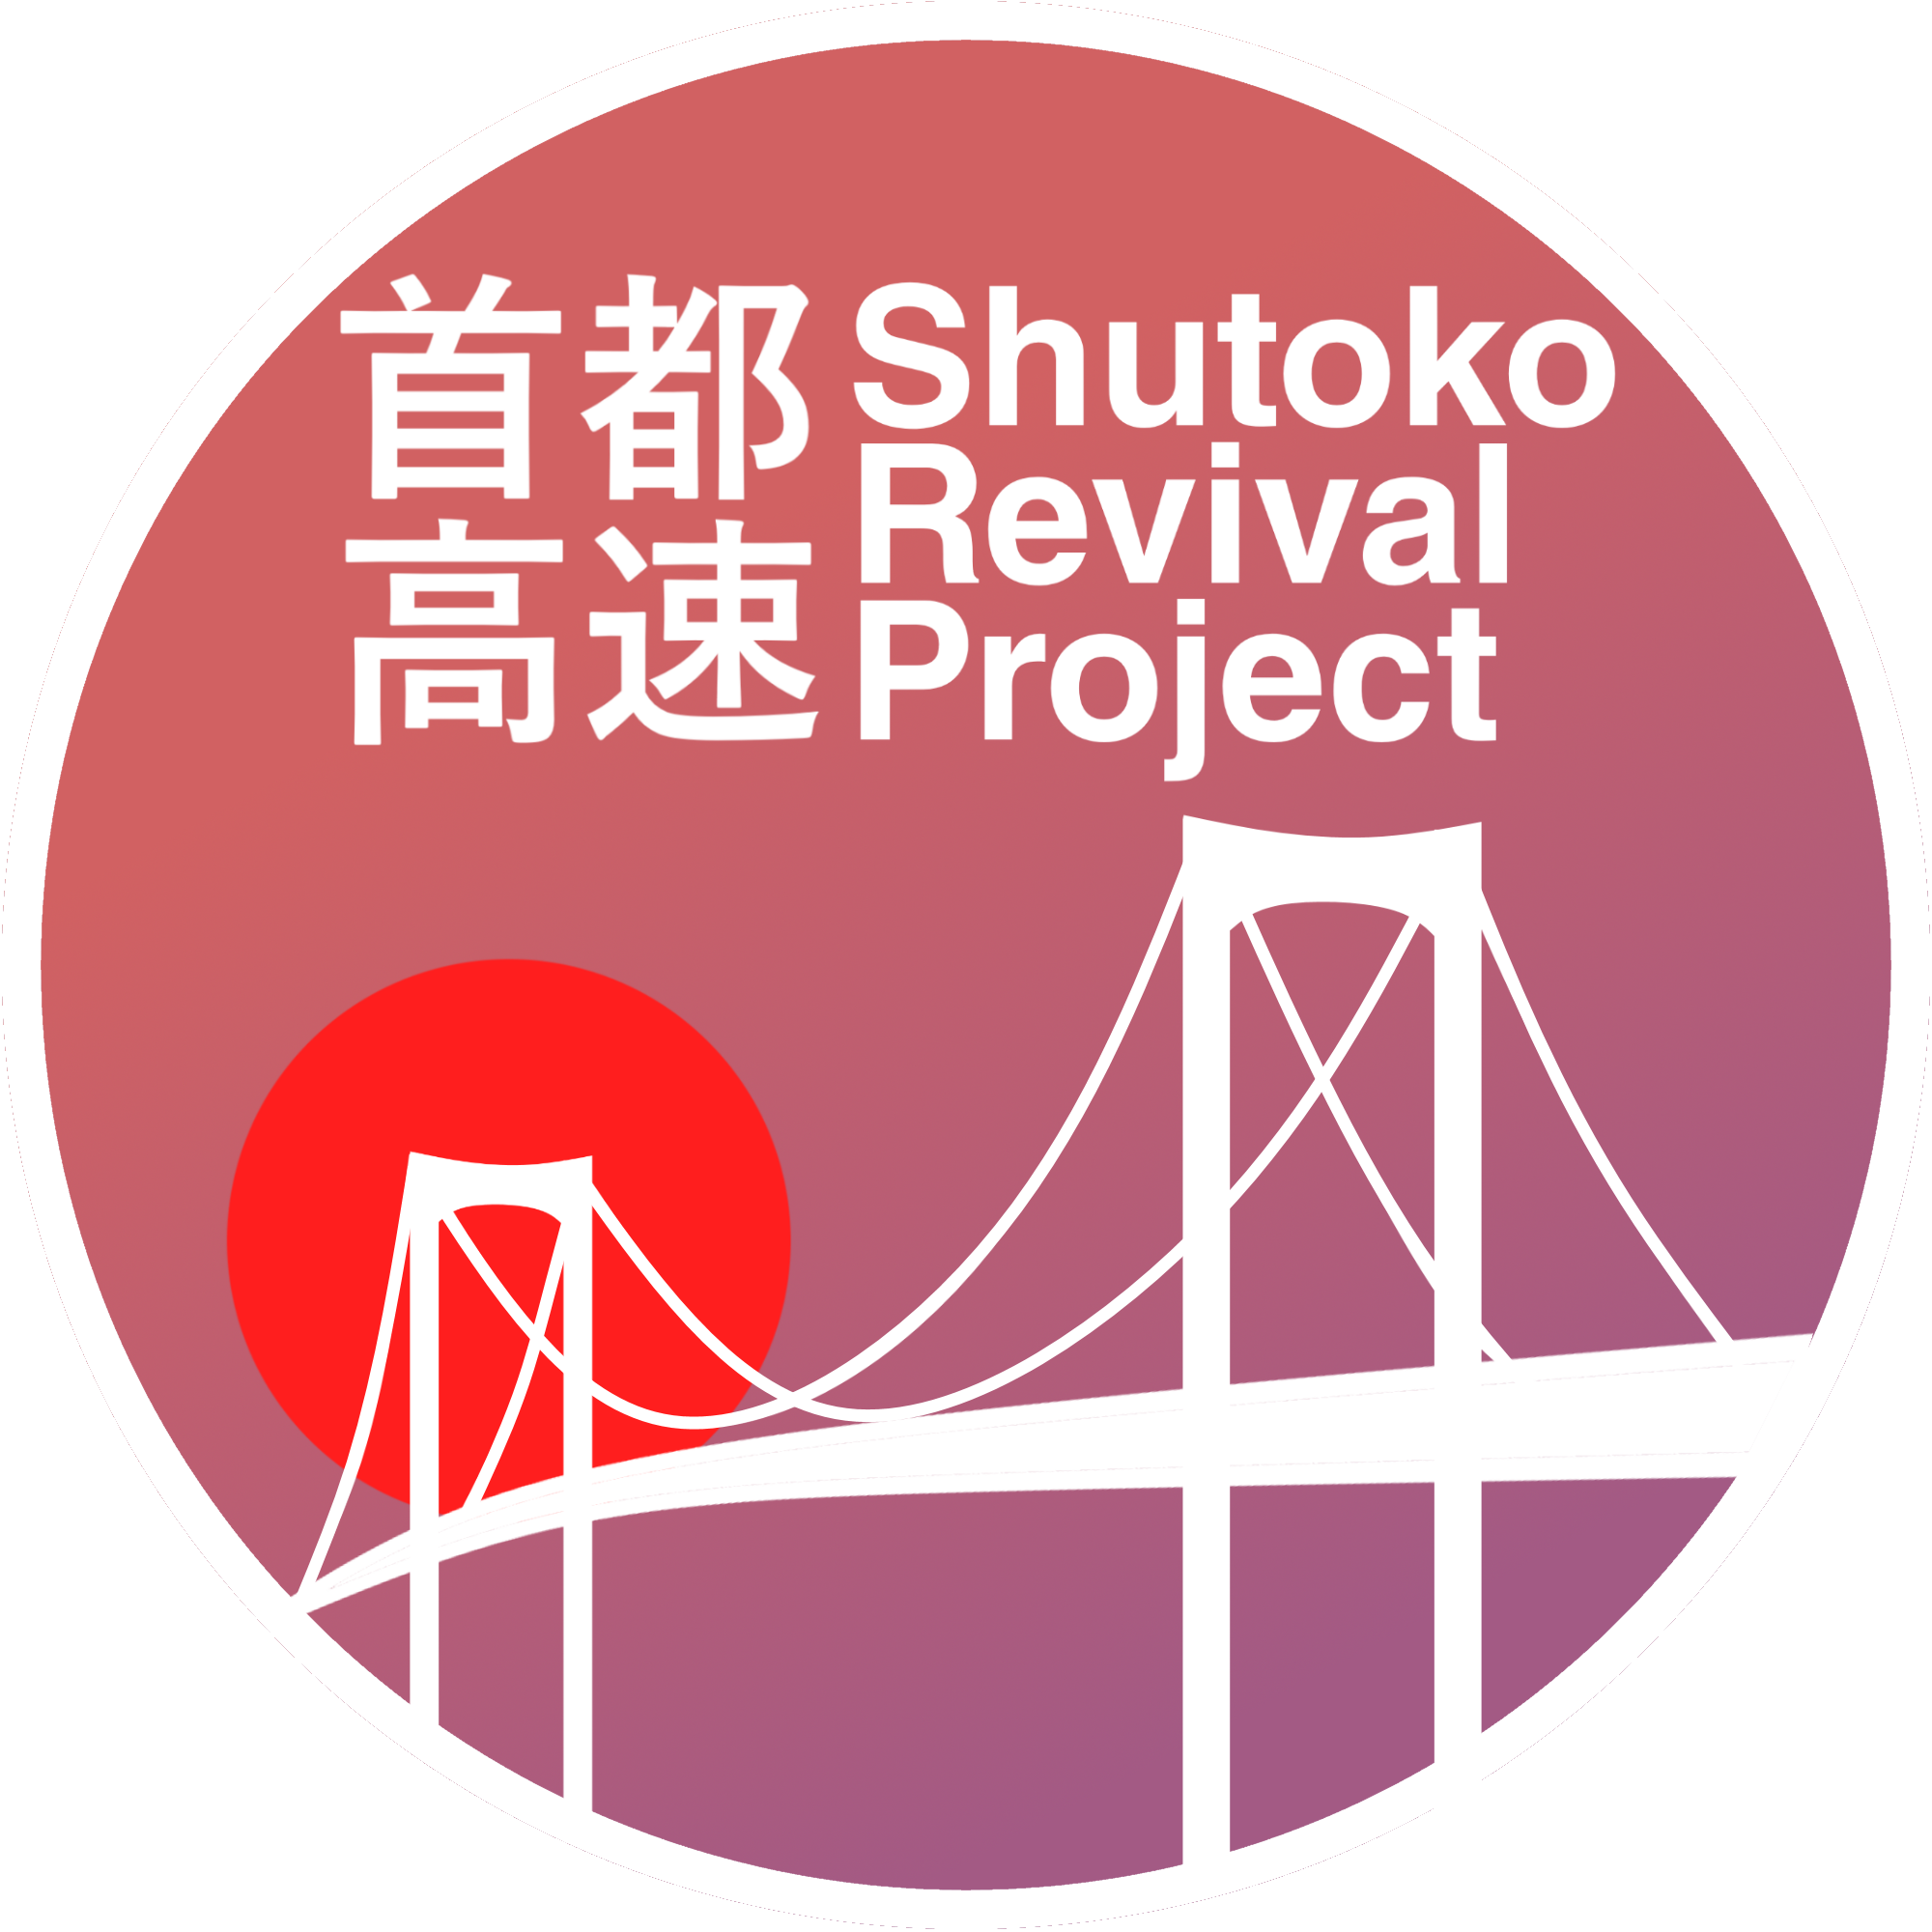 Shutoko revival project download